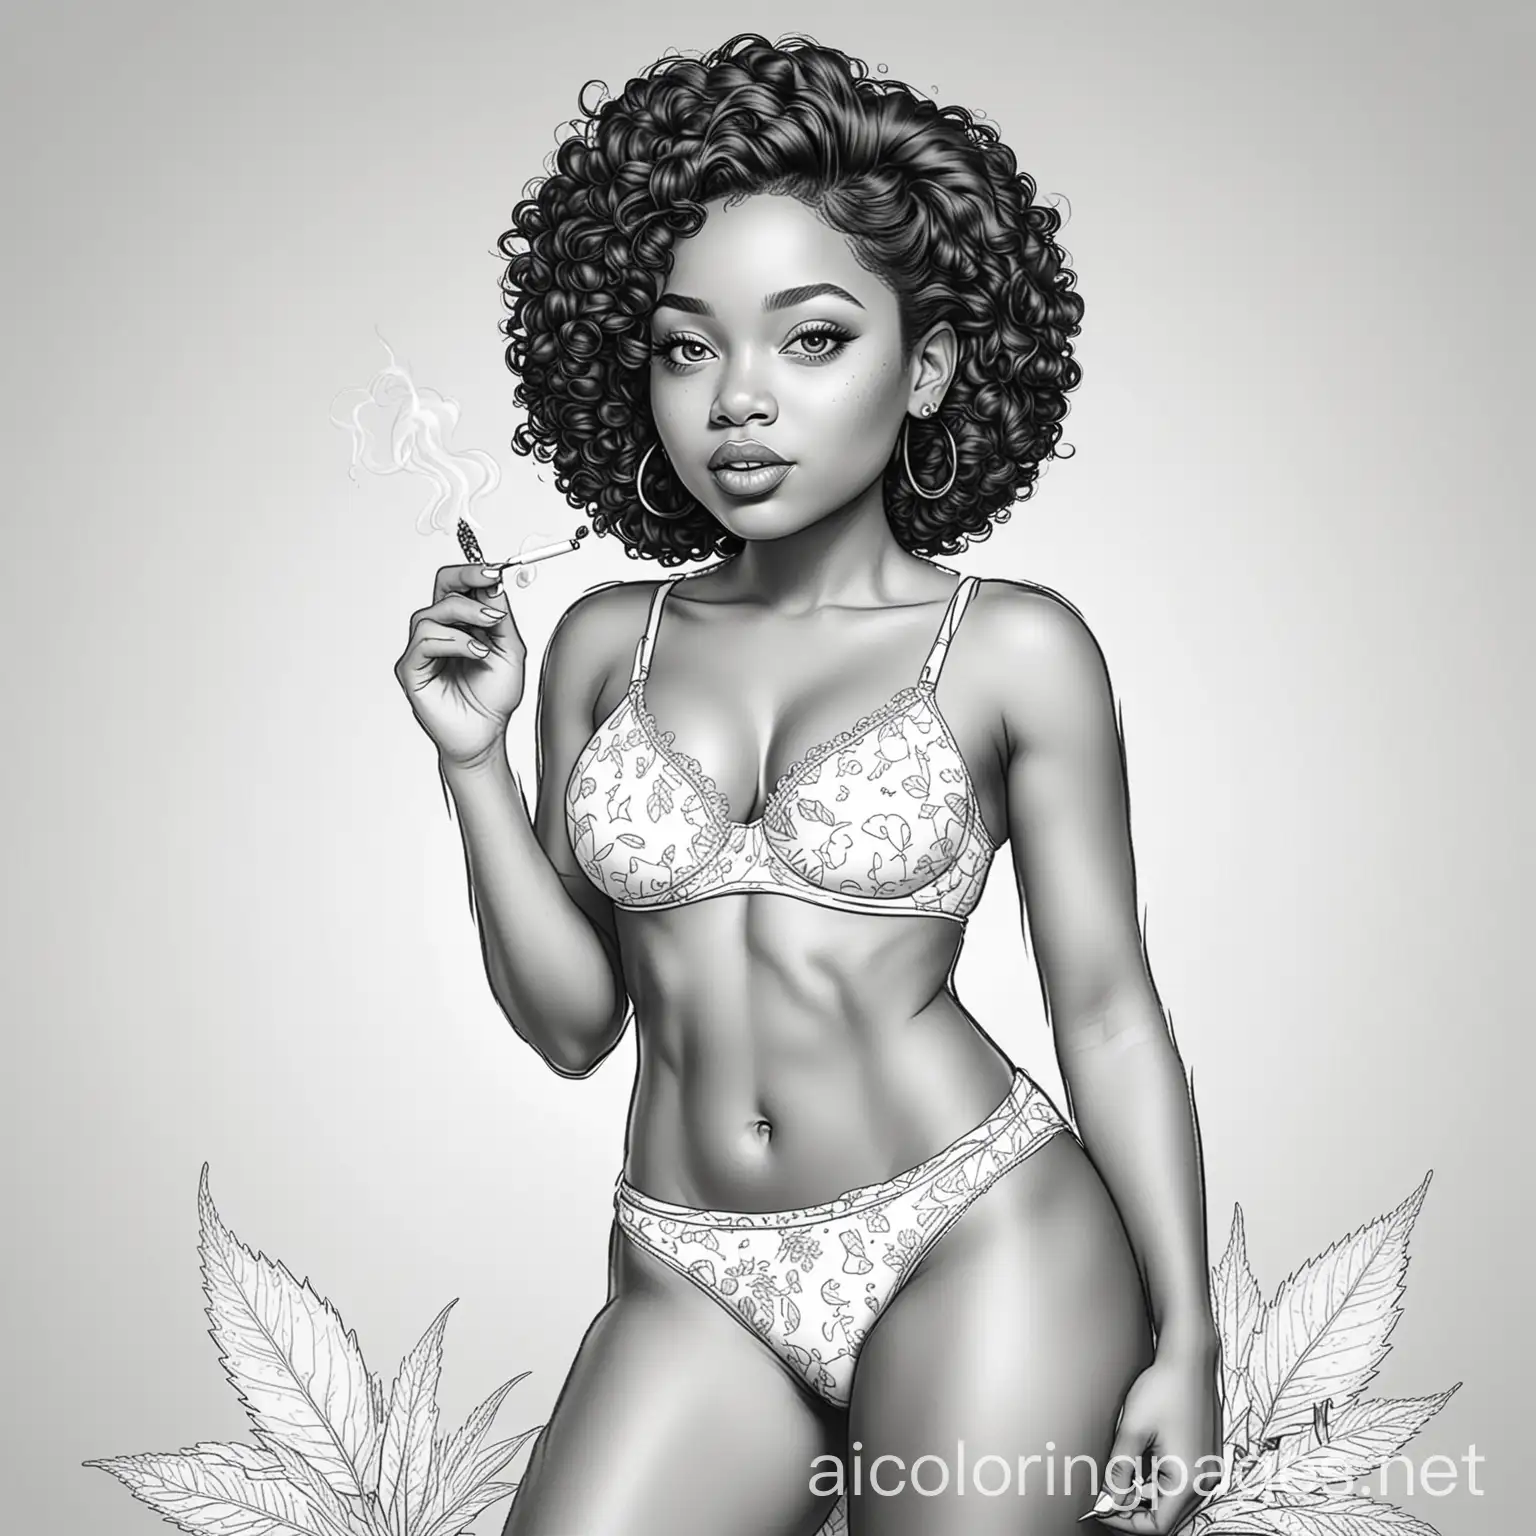 Black-Girl-Coloring-Page-Smoking-Weed-in-Underwear-Line-Art